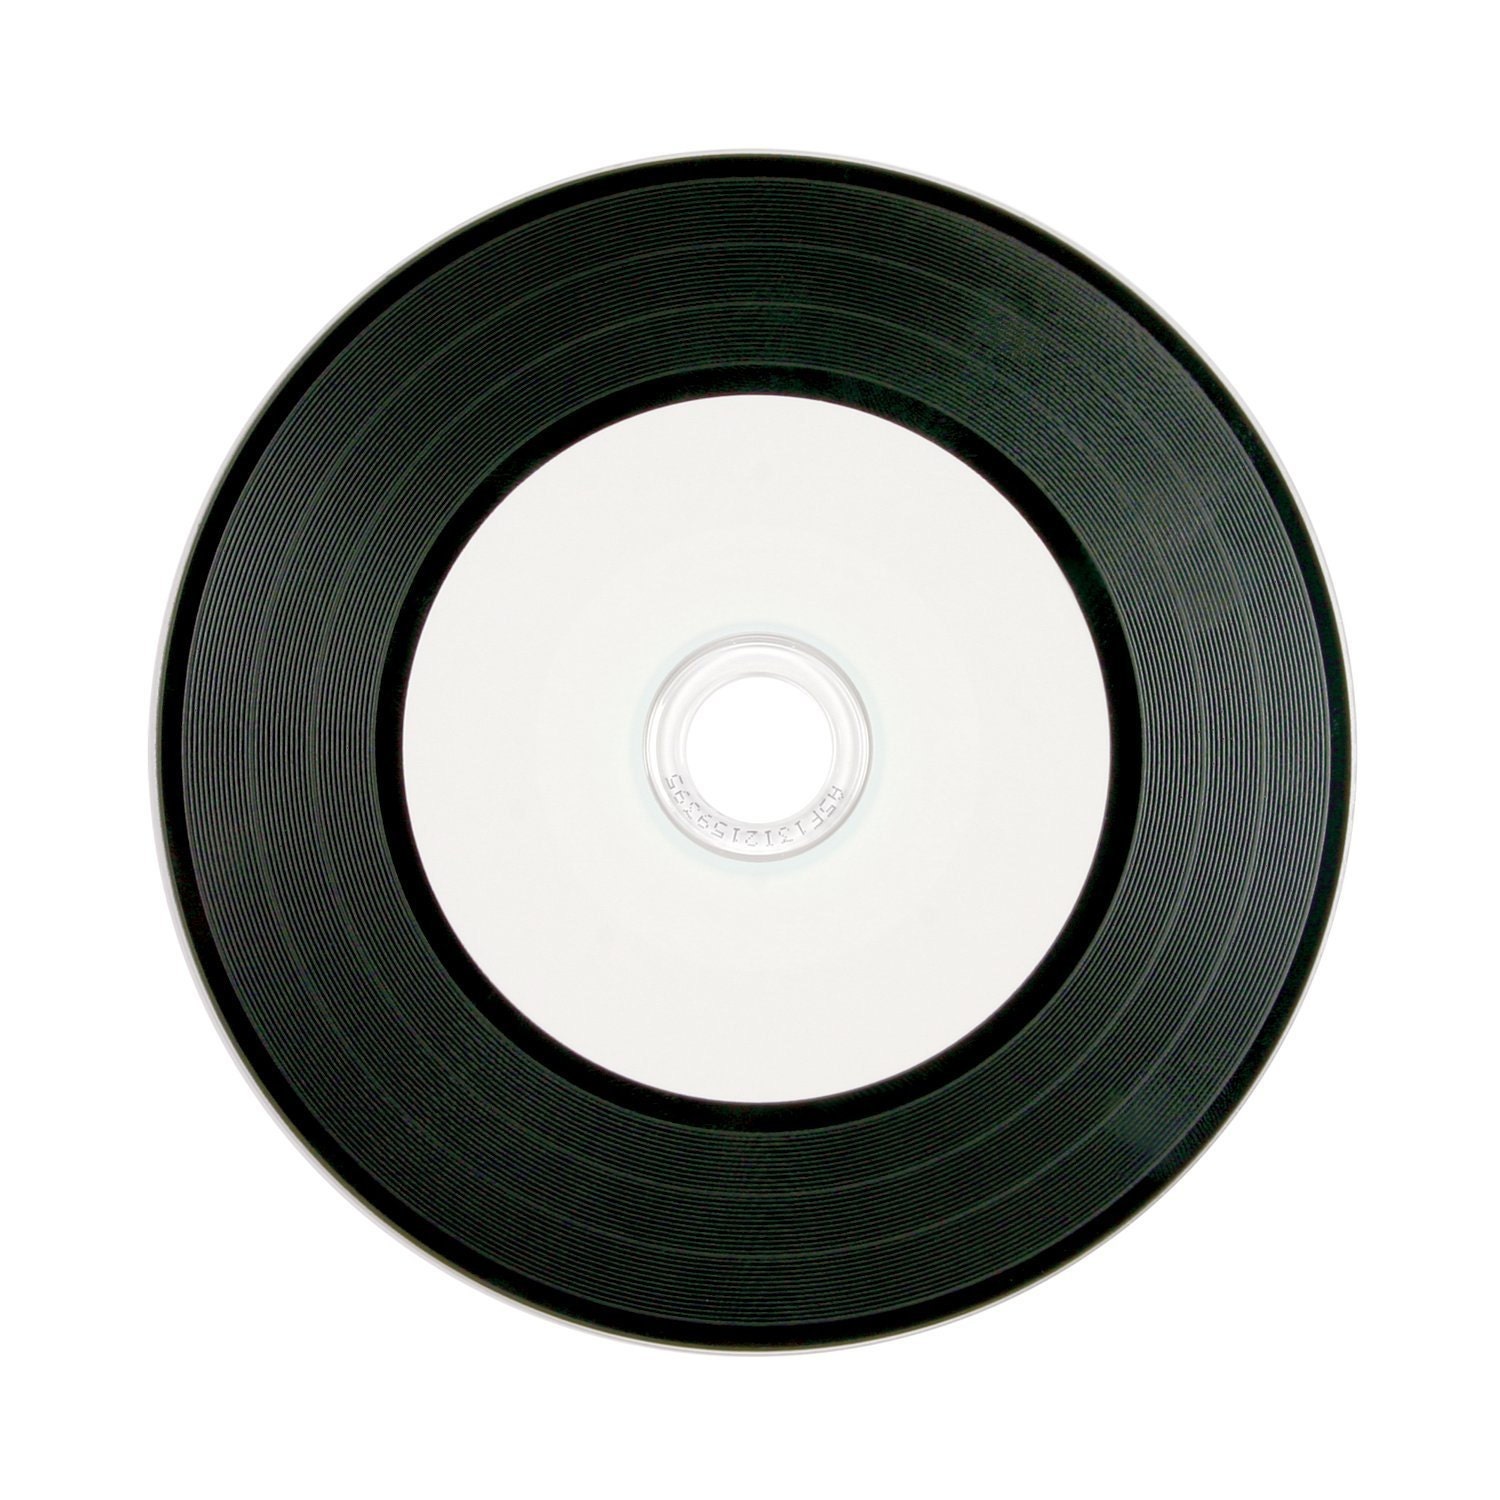 Single Vinyl Style Blank CD Retro Record Album Music and